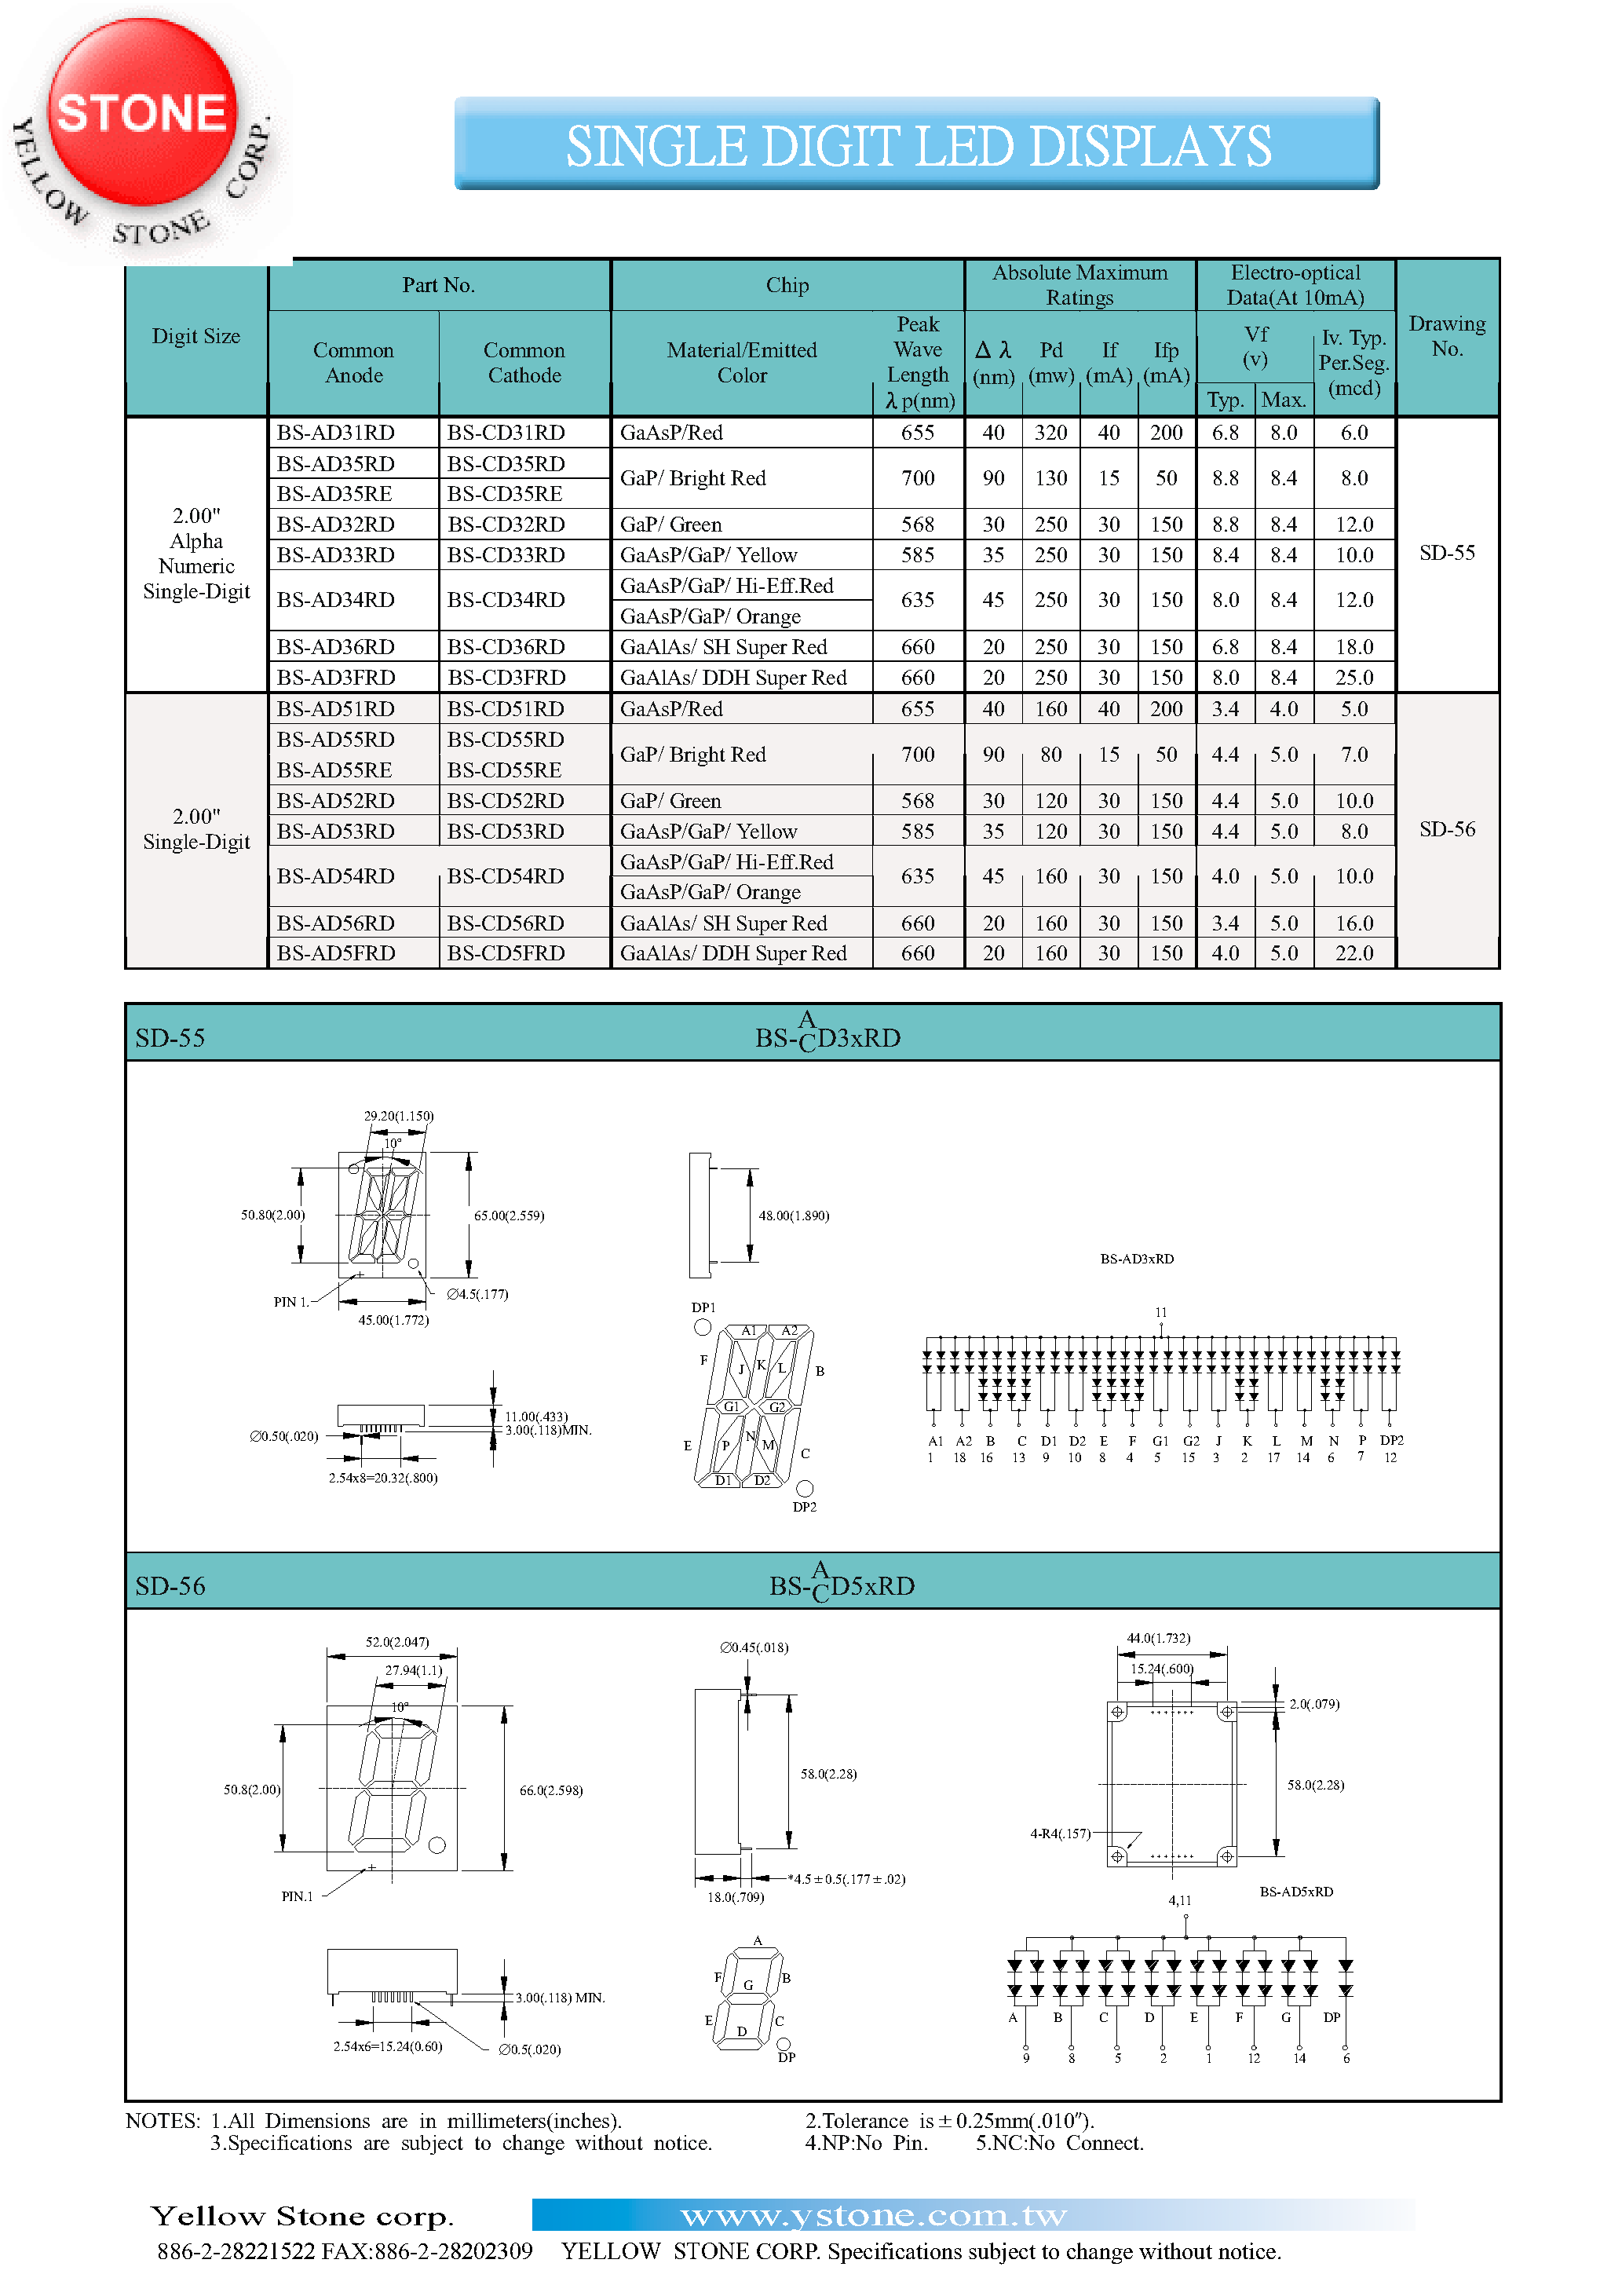 Datasheet BS-AD34RD - SINGLE DIGIT LED DISPLAYS page 1